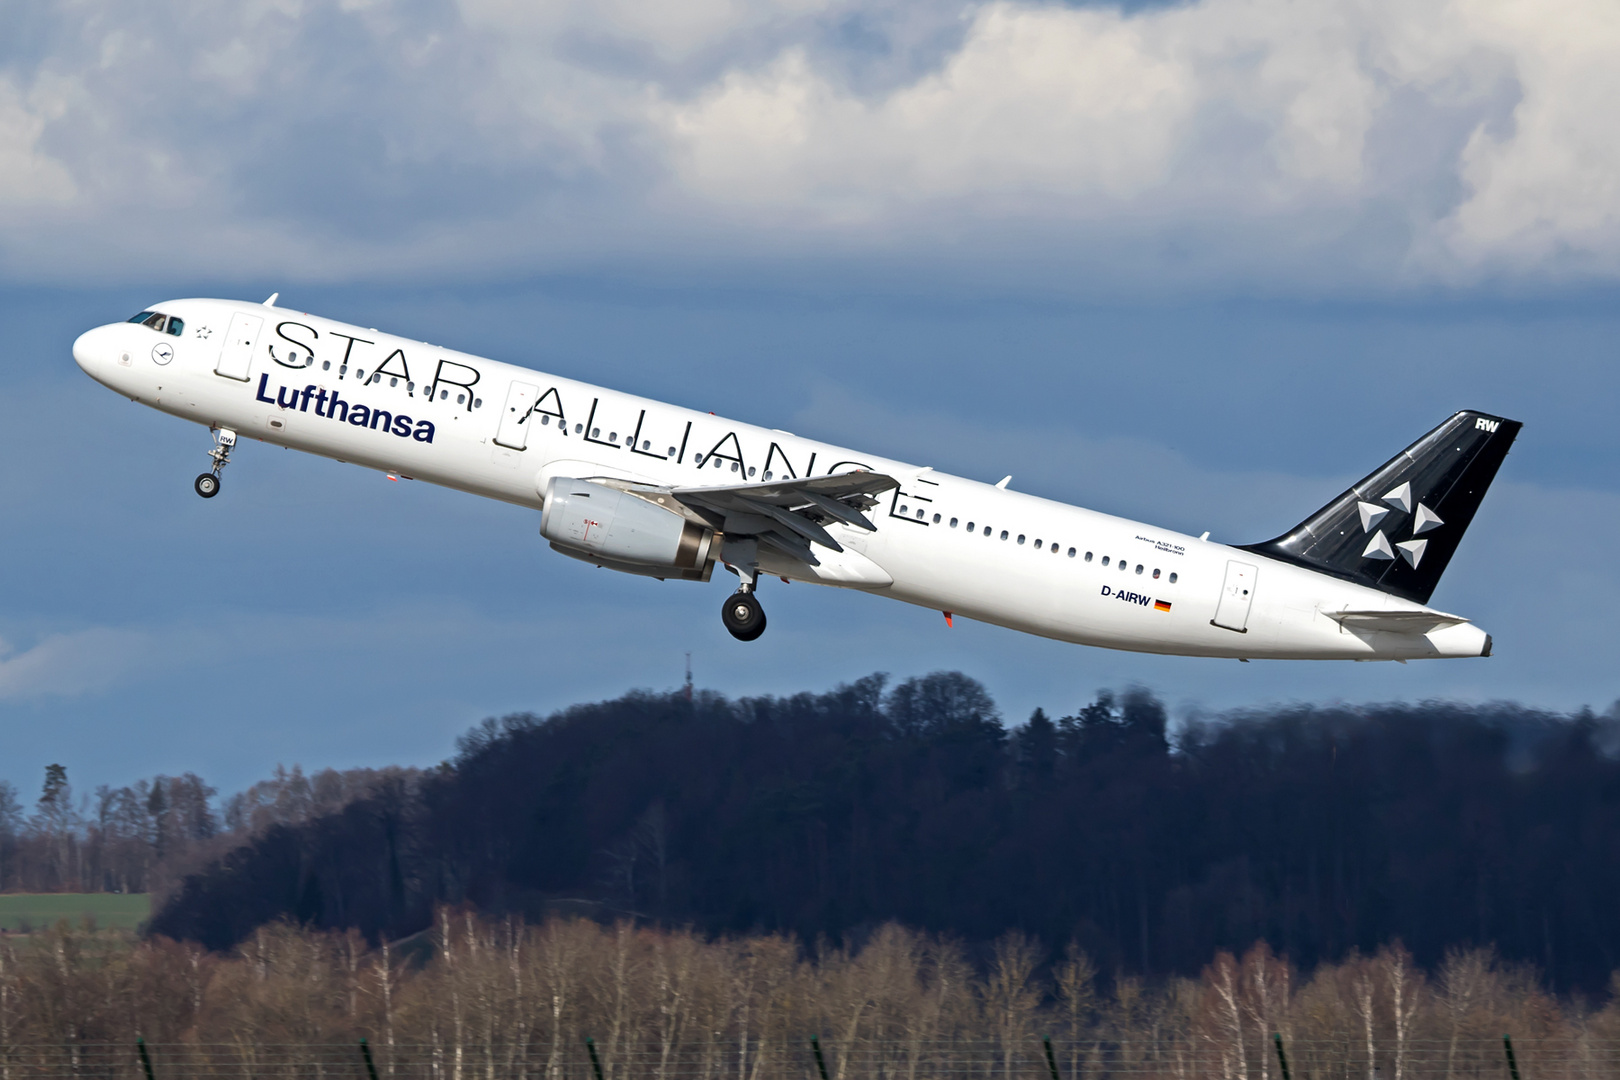 Lufthansa A321, D-AIRW, Star Alliance